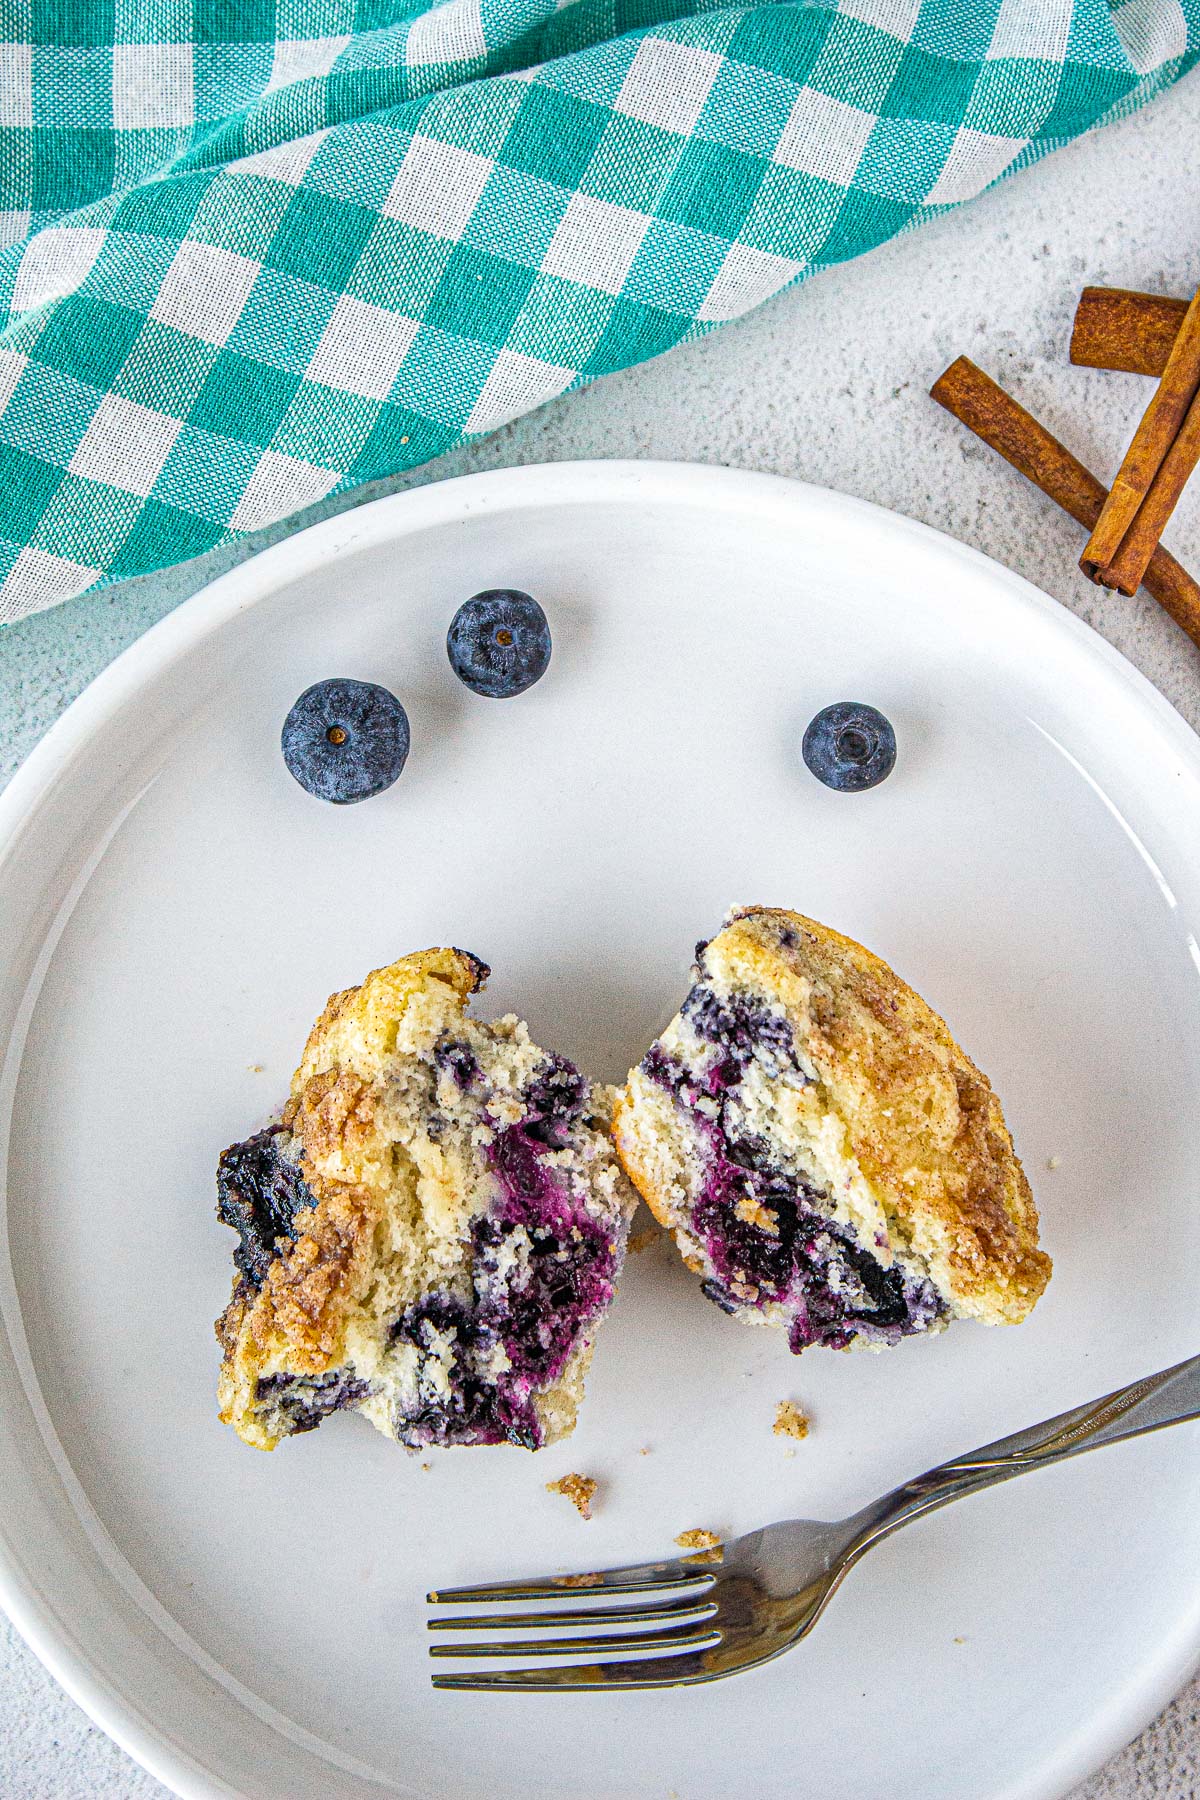 blueberry muffin broken open revealing fresh gooey blueberries inside